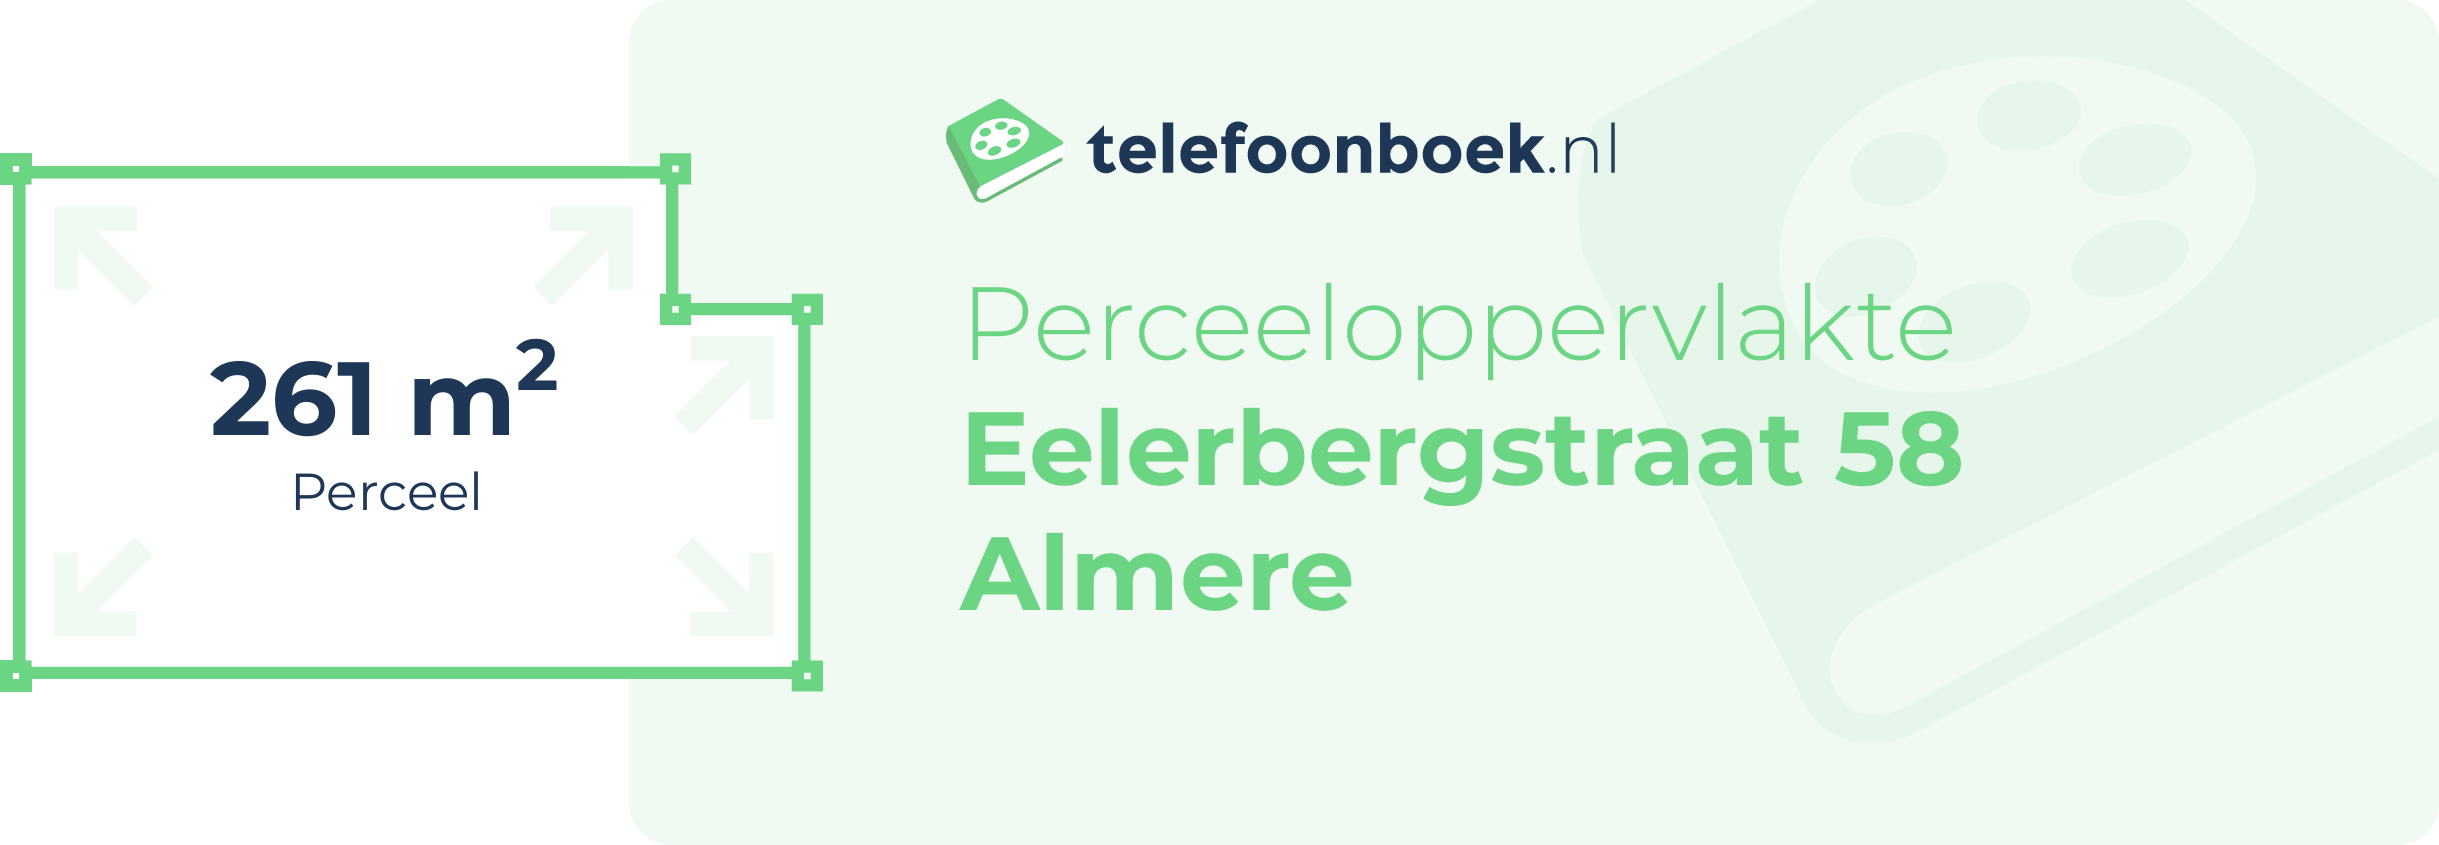 Perceeloppervlakte Eelerbergstraat 58 Almere